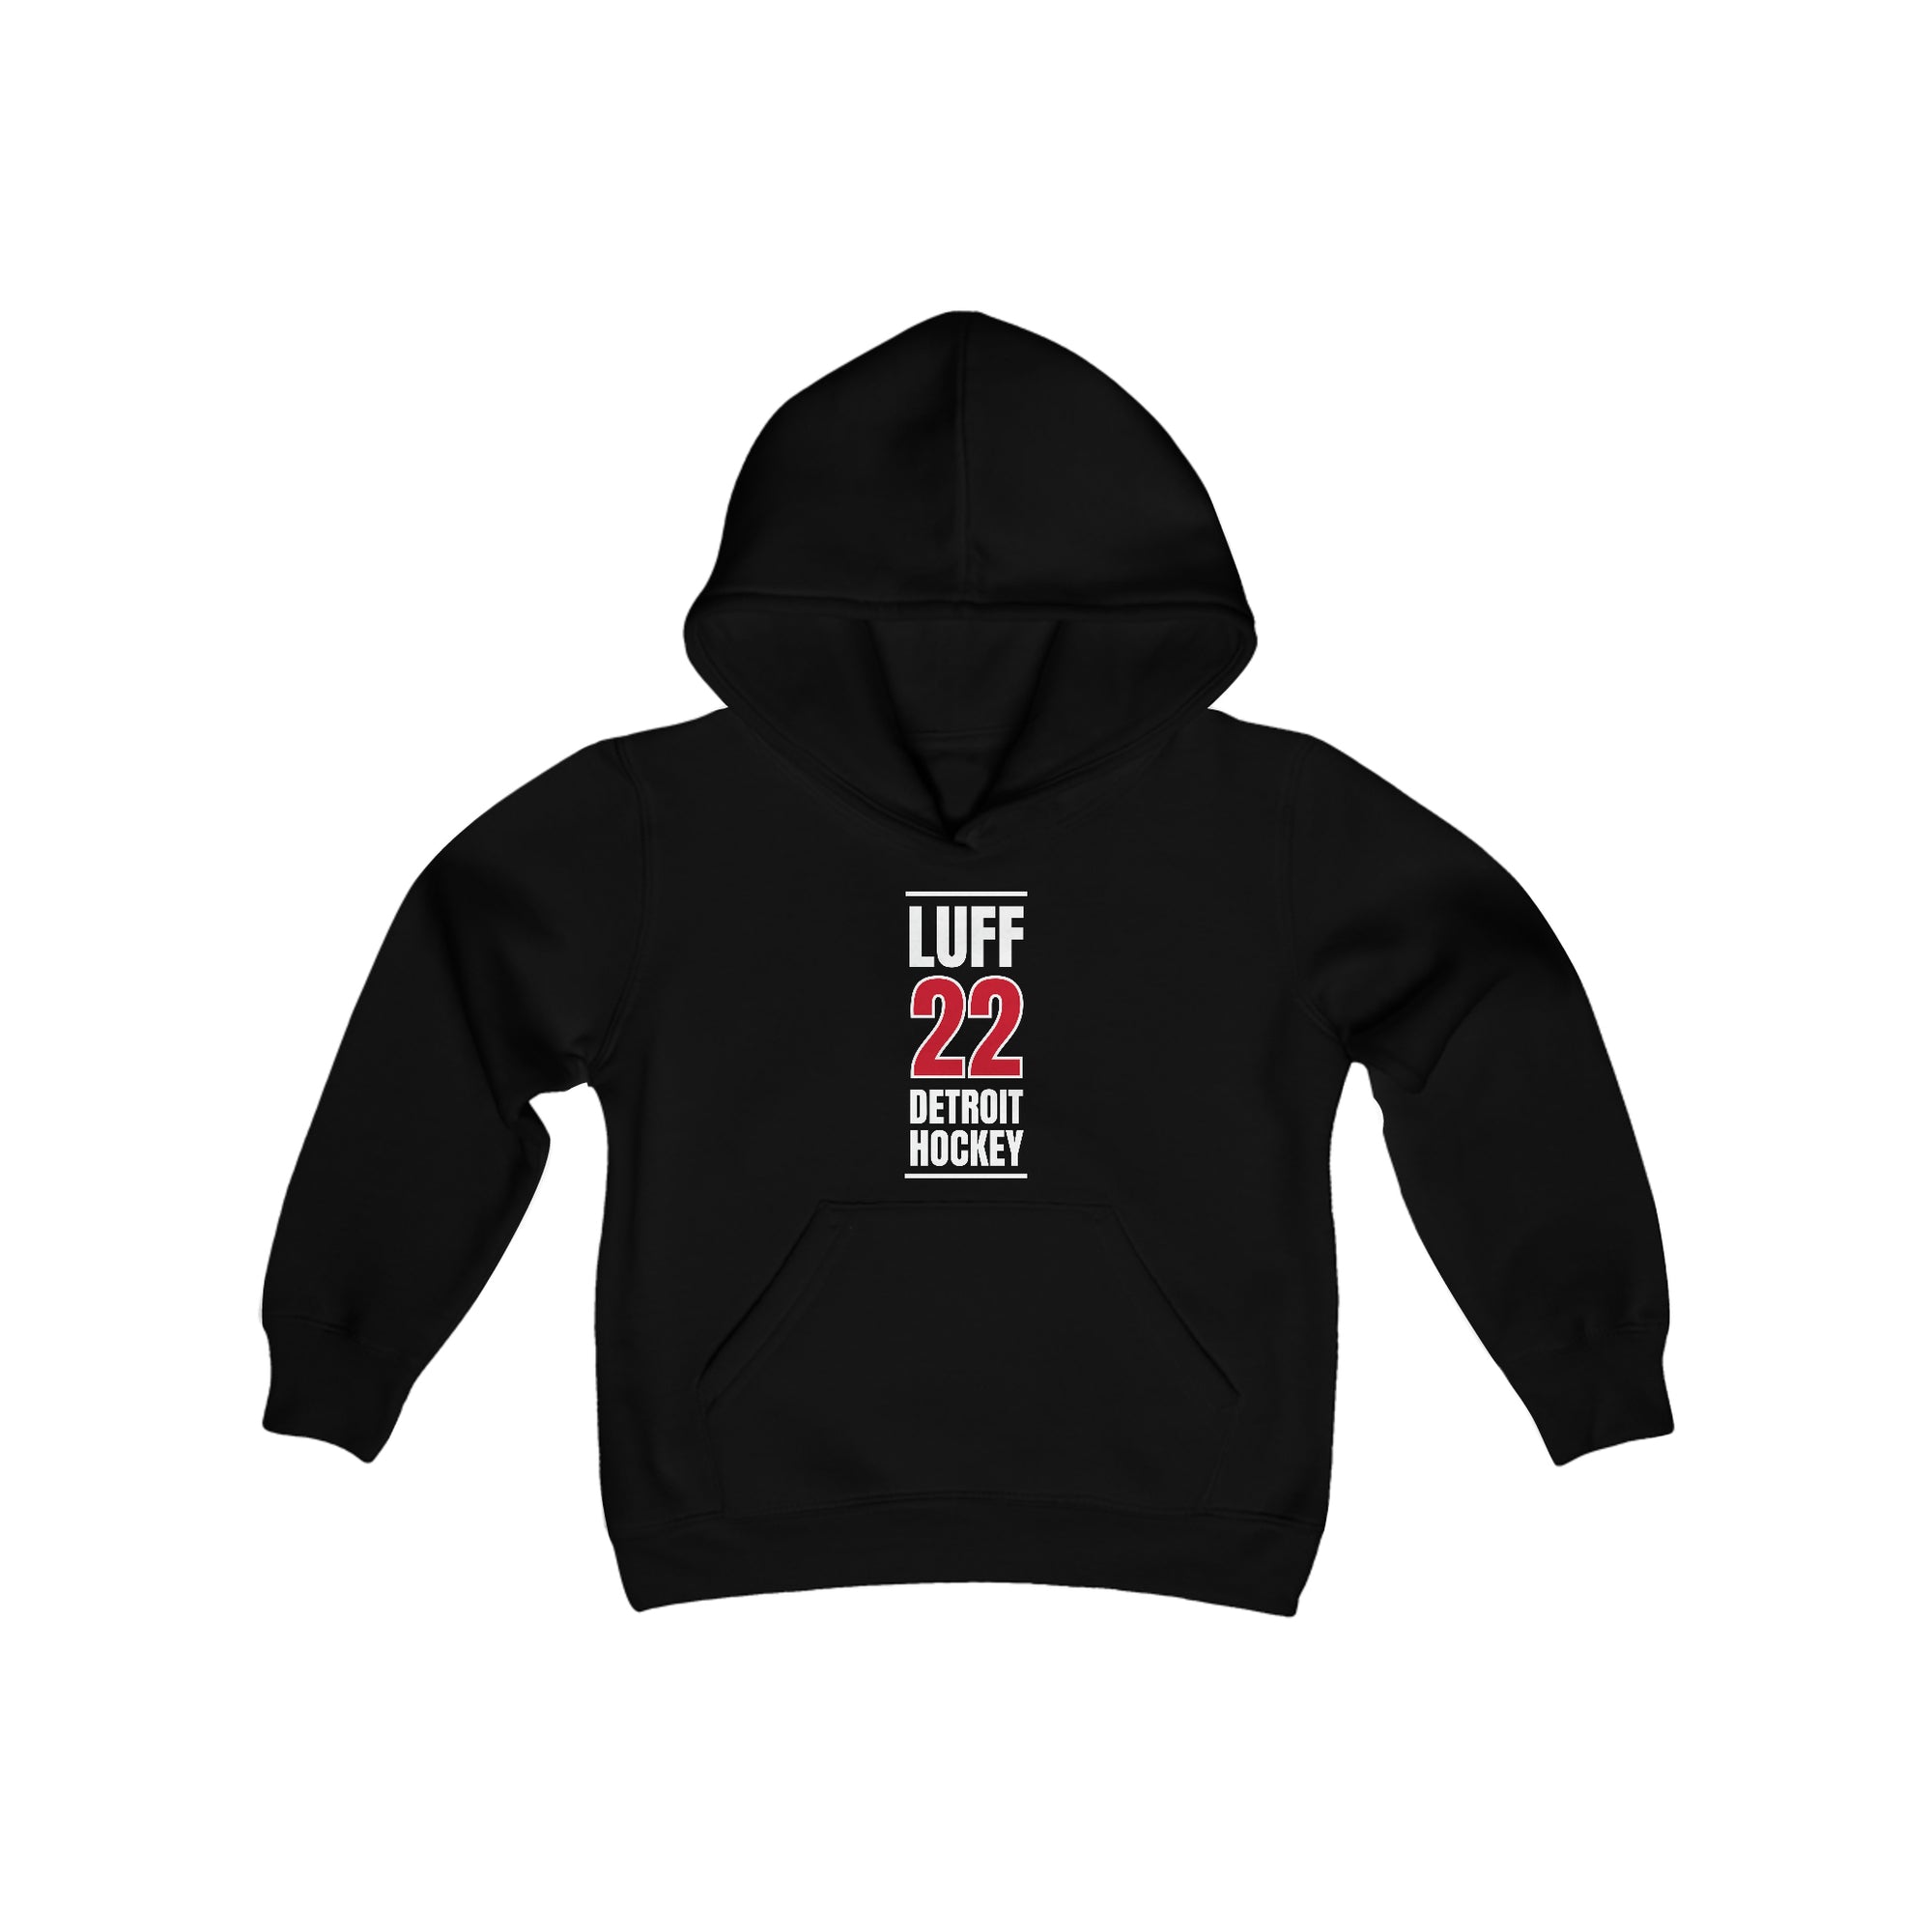 Luff 22 Detroit Hockey Red Vertical Design Youth Hooded Sweatshirt